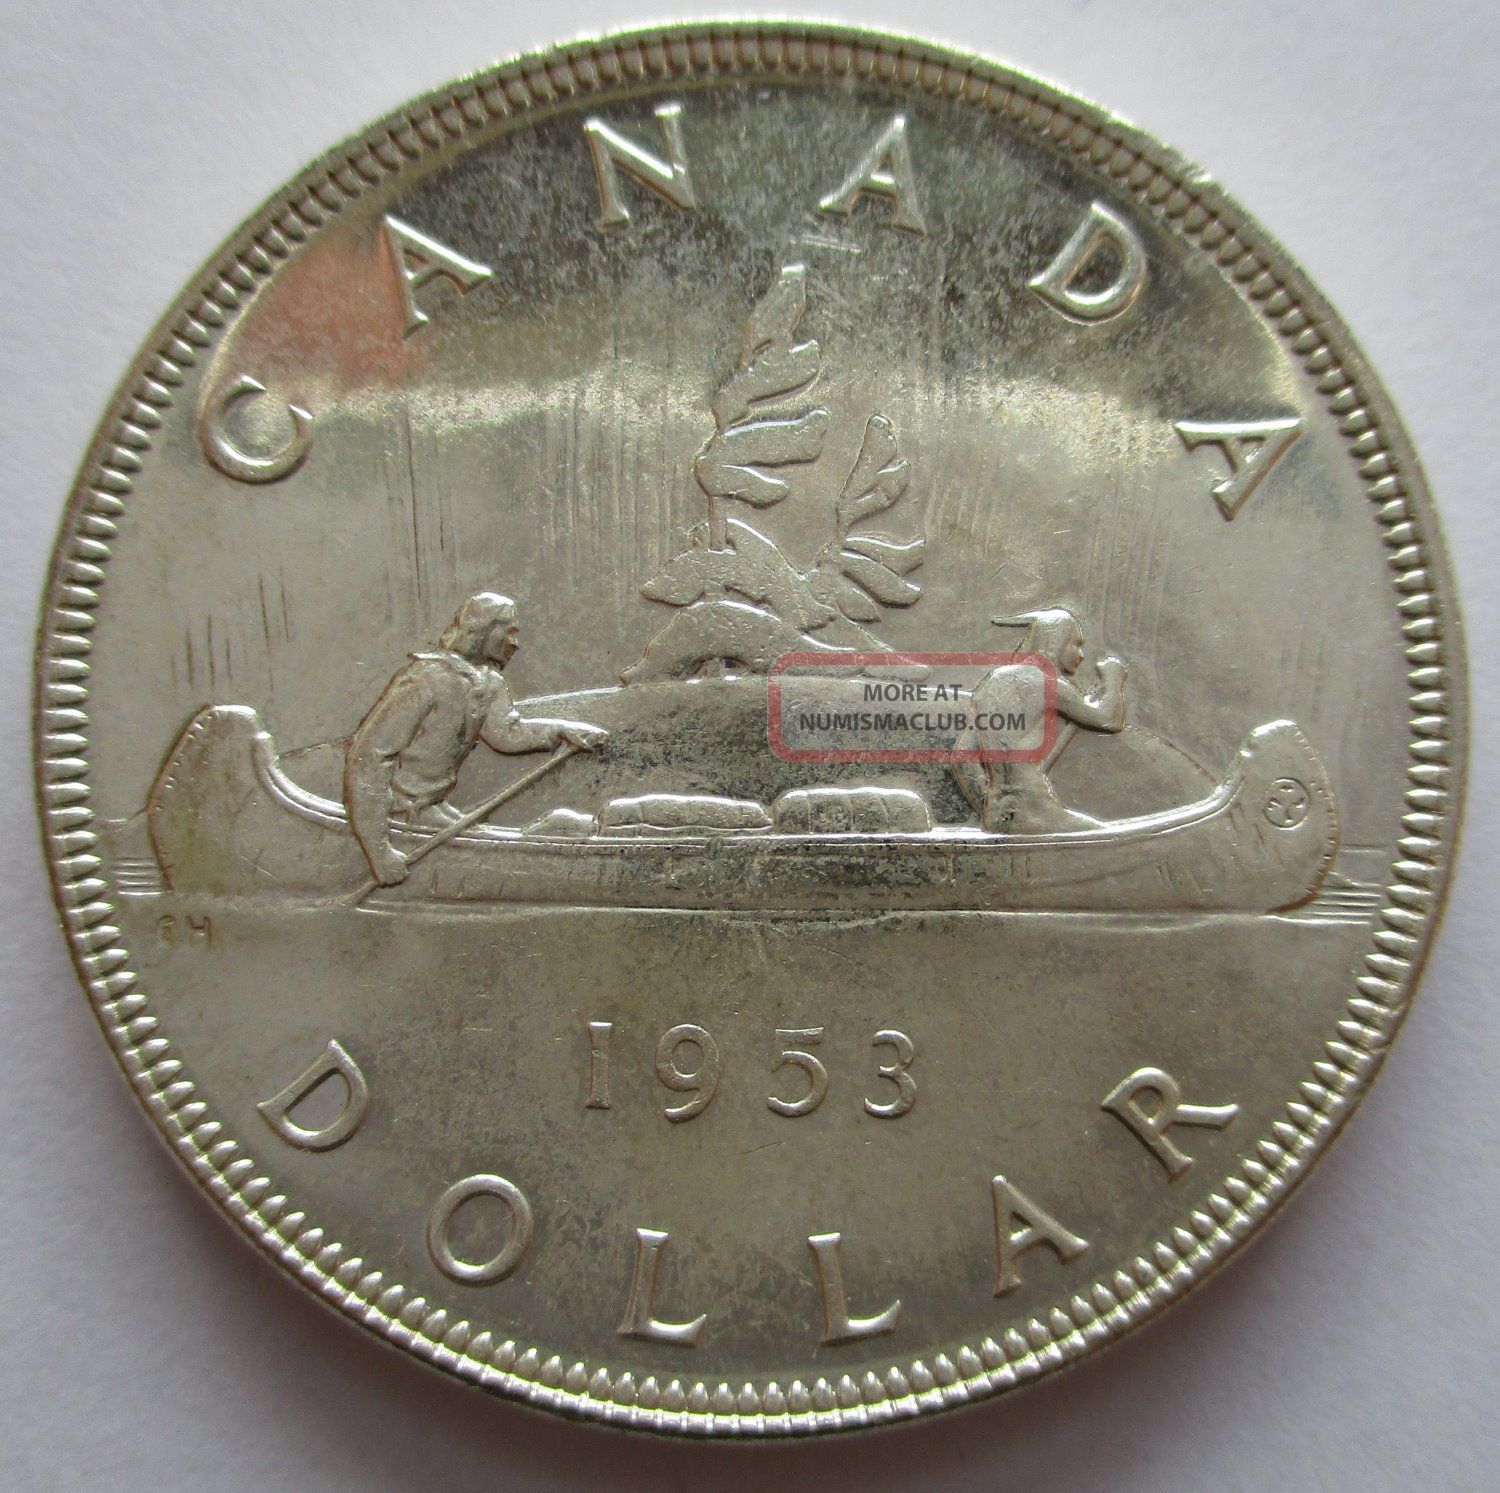 Canada 1953 Silver Brilliant Uncirculated No Shoulder Fold Dollar - Ms62 Coins: Canada photo